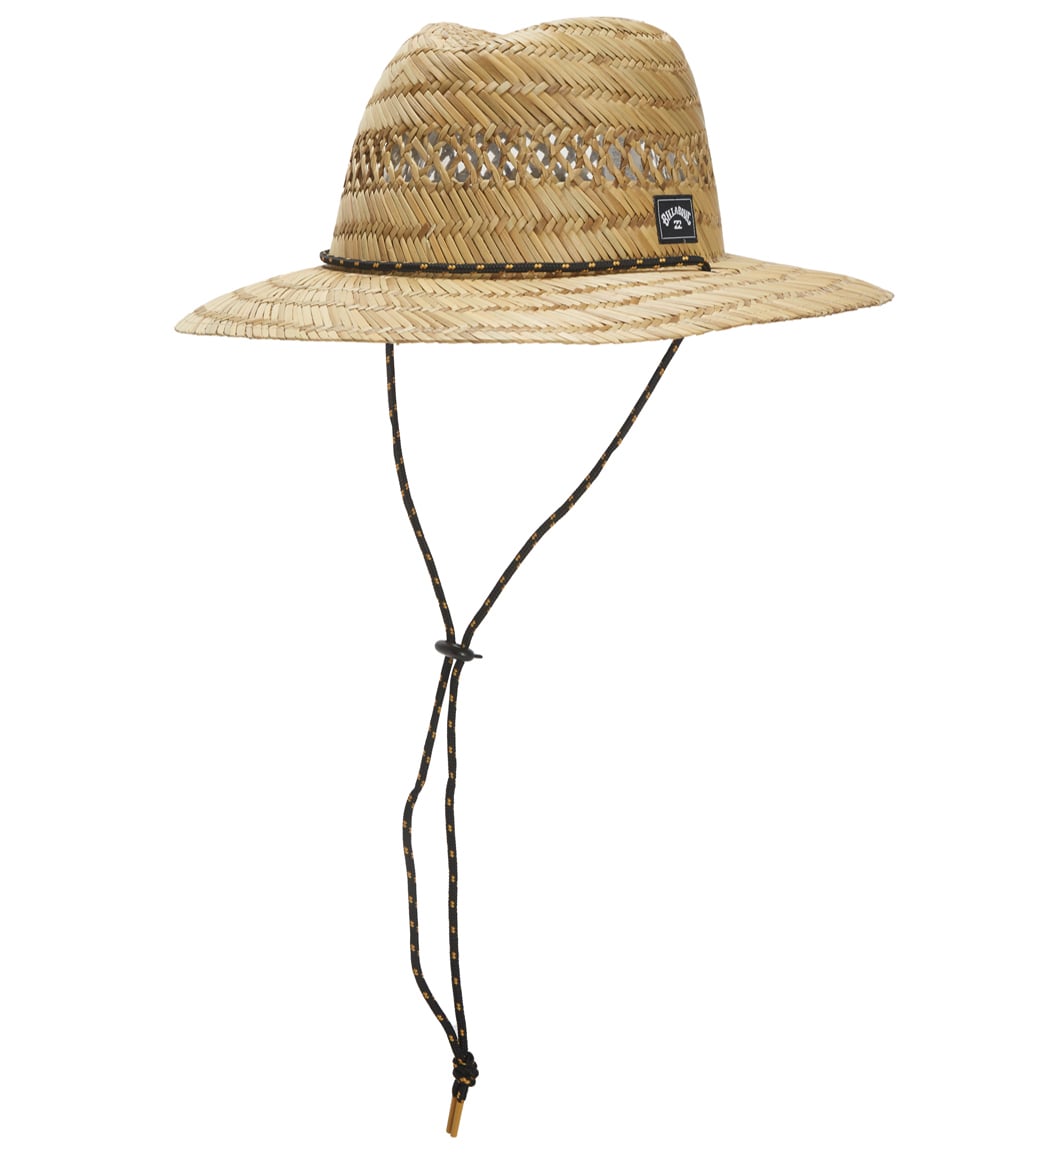 Billabong Men's Nomad Vented Hat - Tobacco One Size - Swimoutlet.com